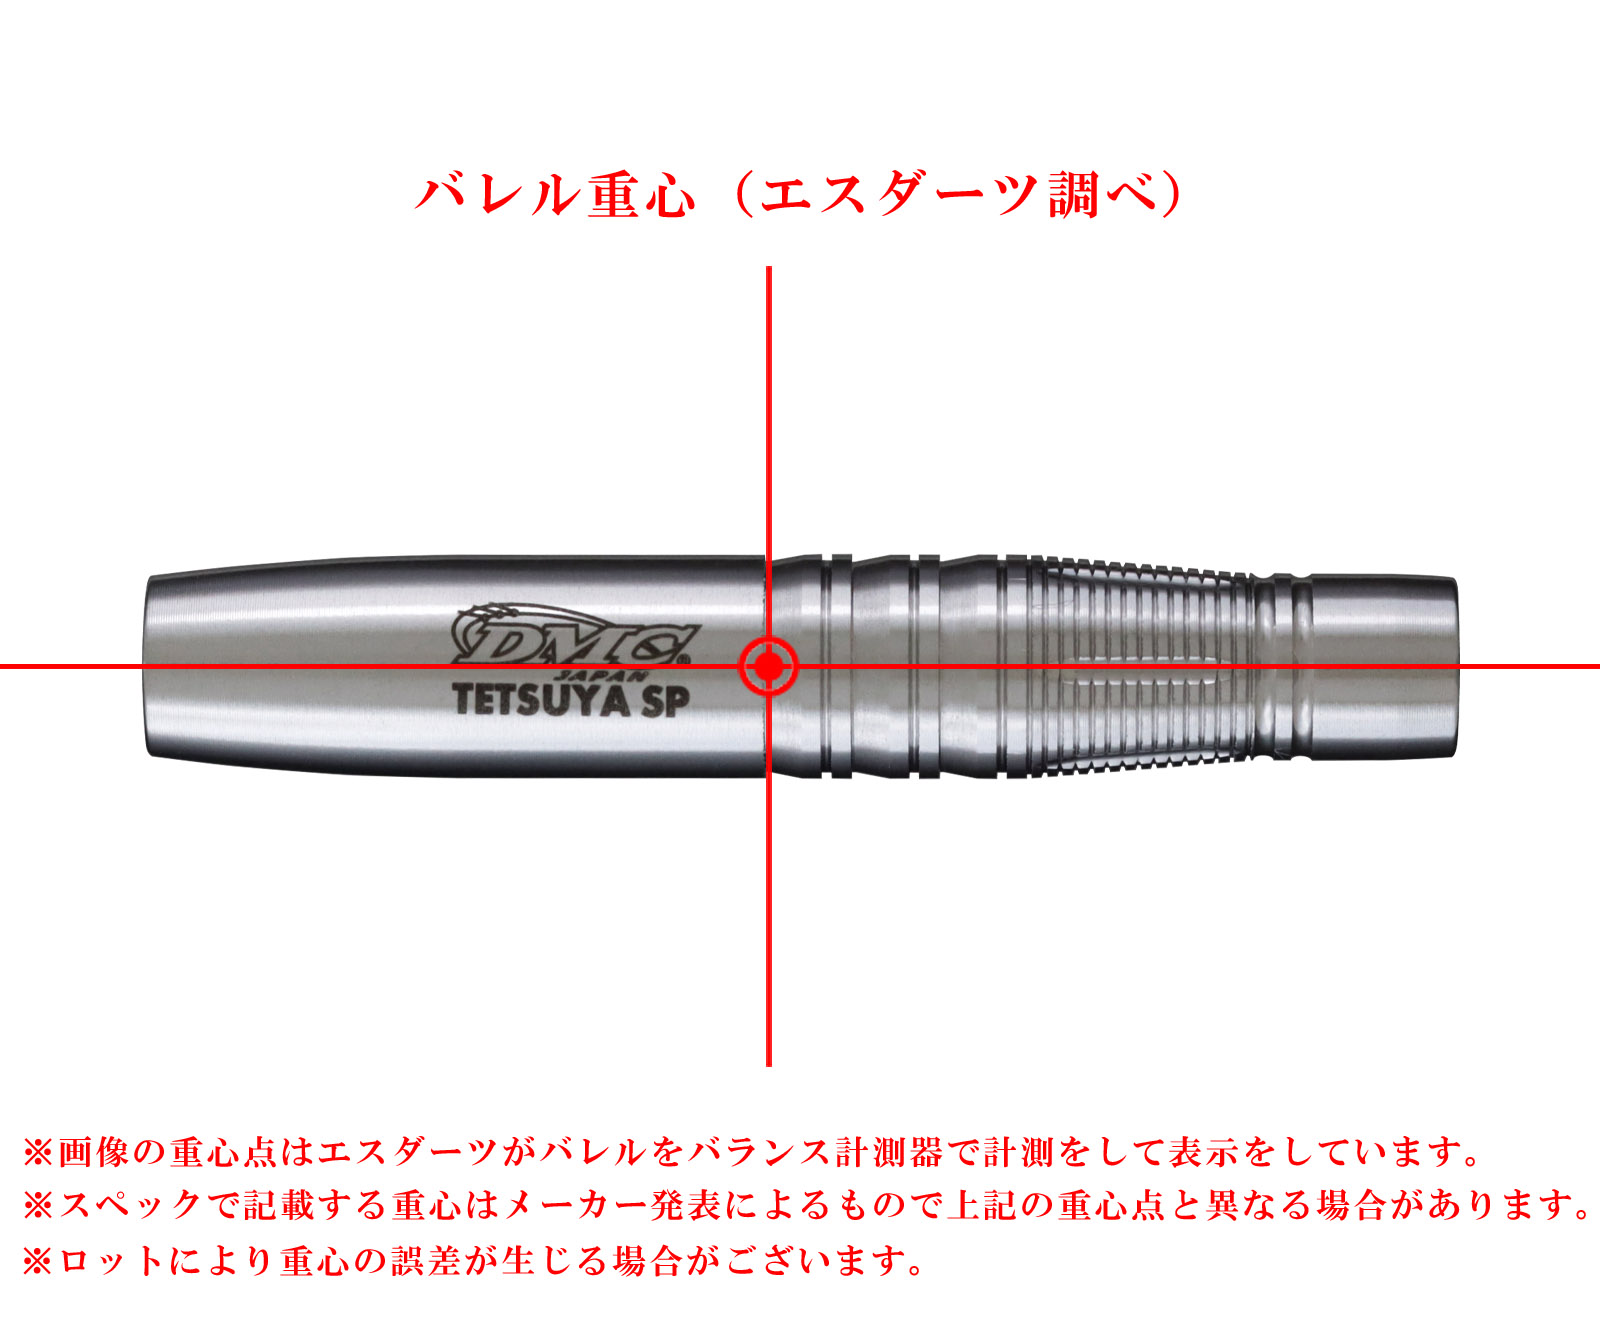 Darts & DMC & Soft-tip Darts | Darts Online Shop S-DARTS from JAPAN.